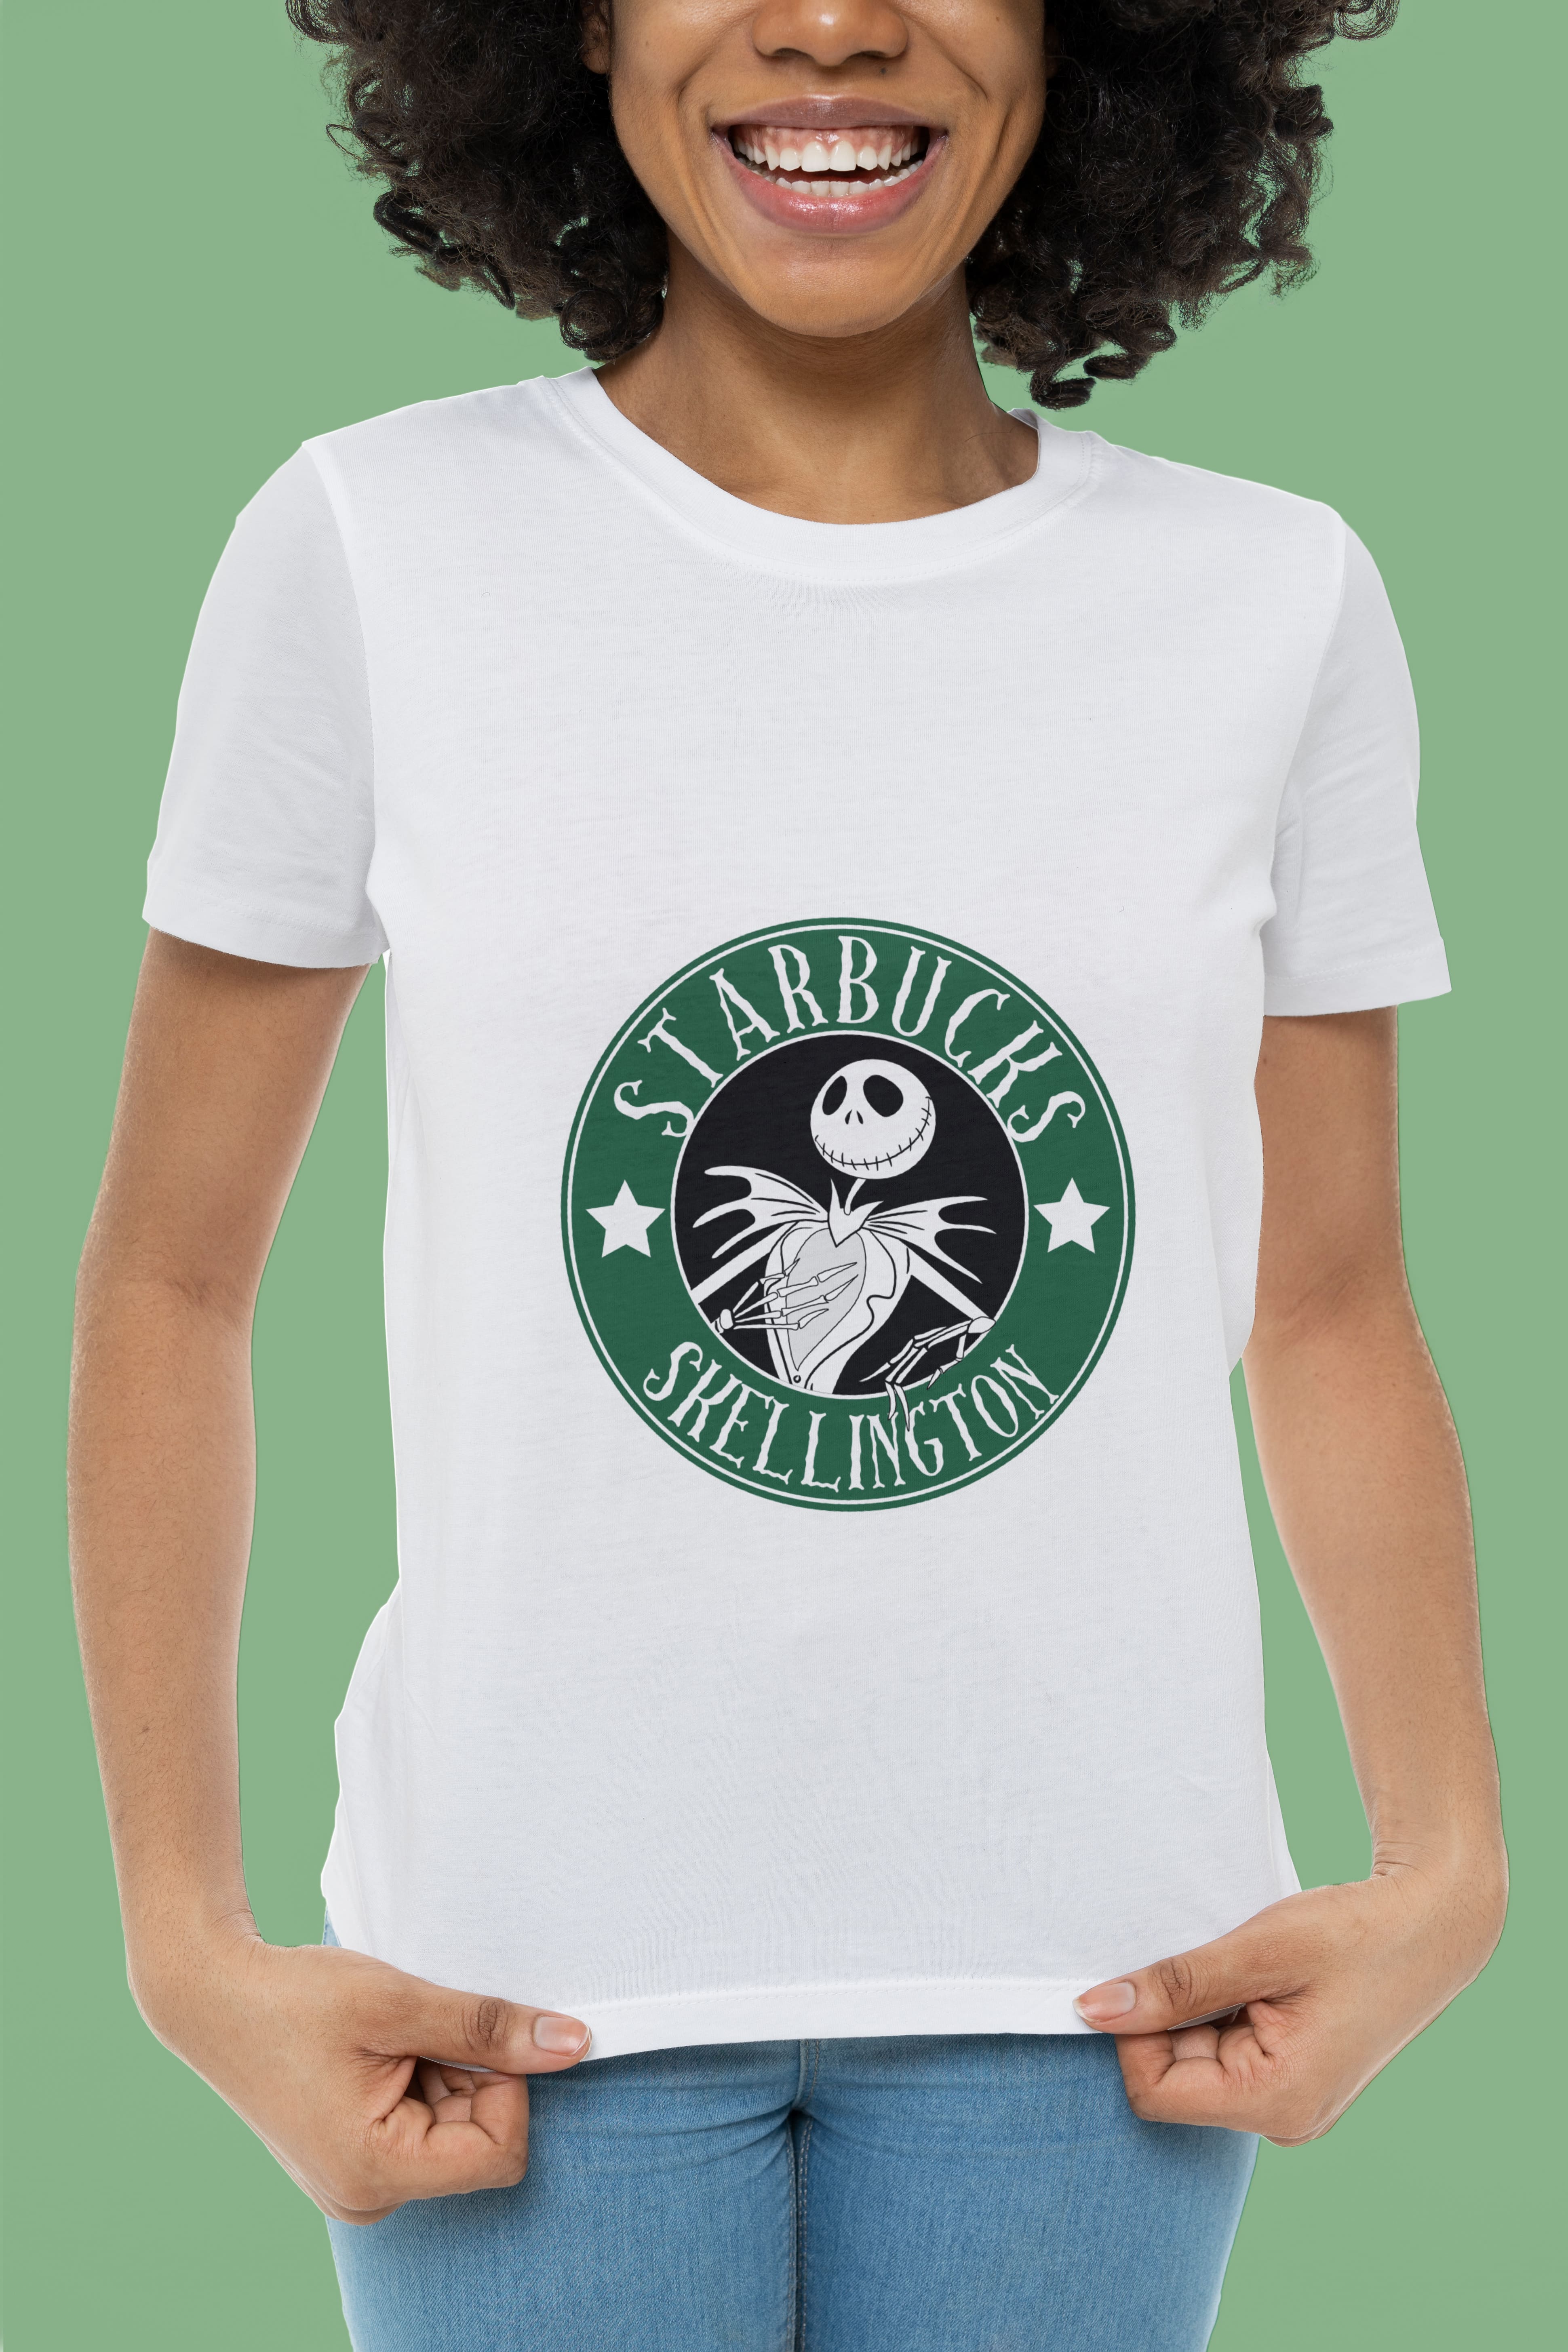 Illustration of a starbucks skellington in green round shape on the white t-shirt.